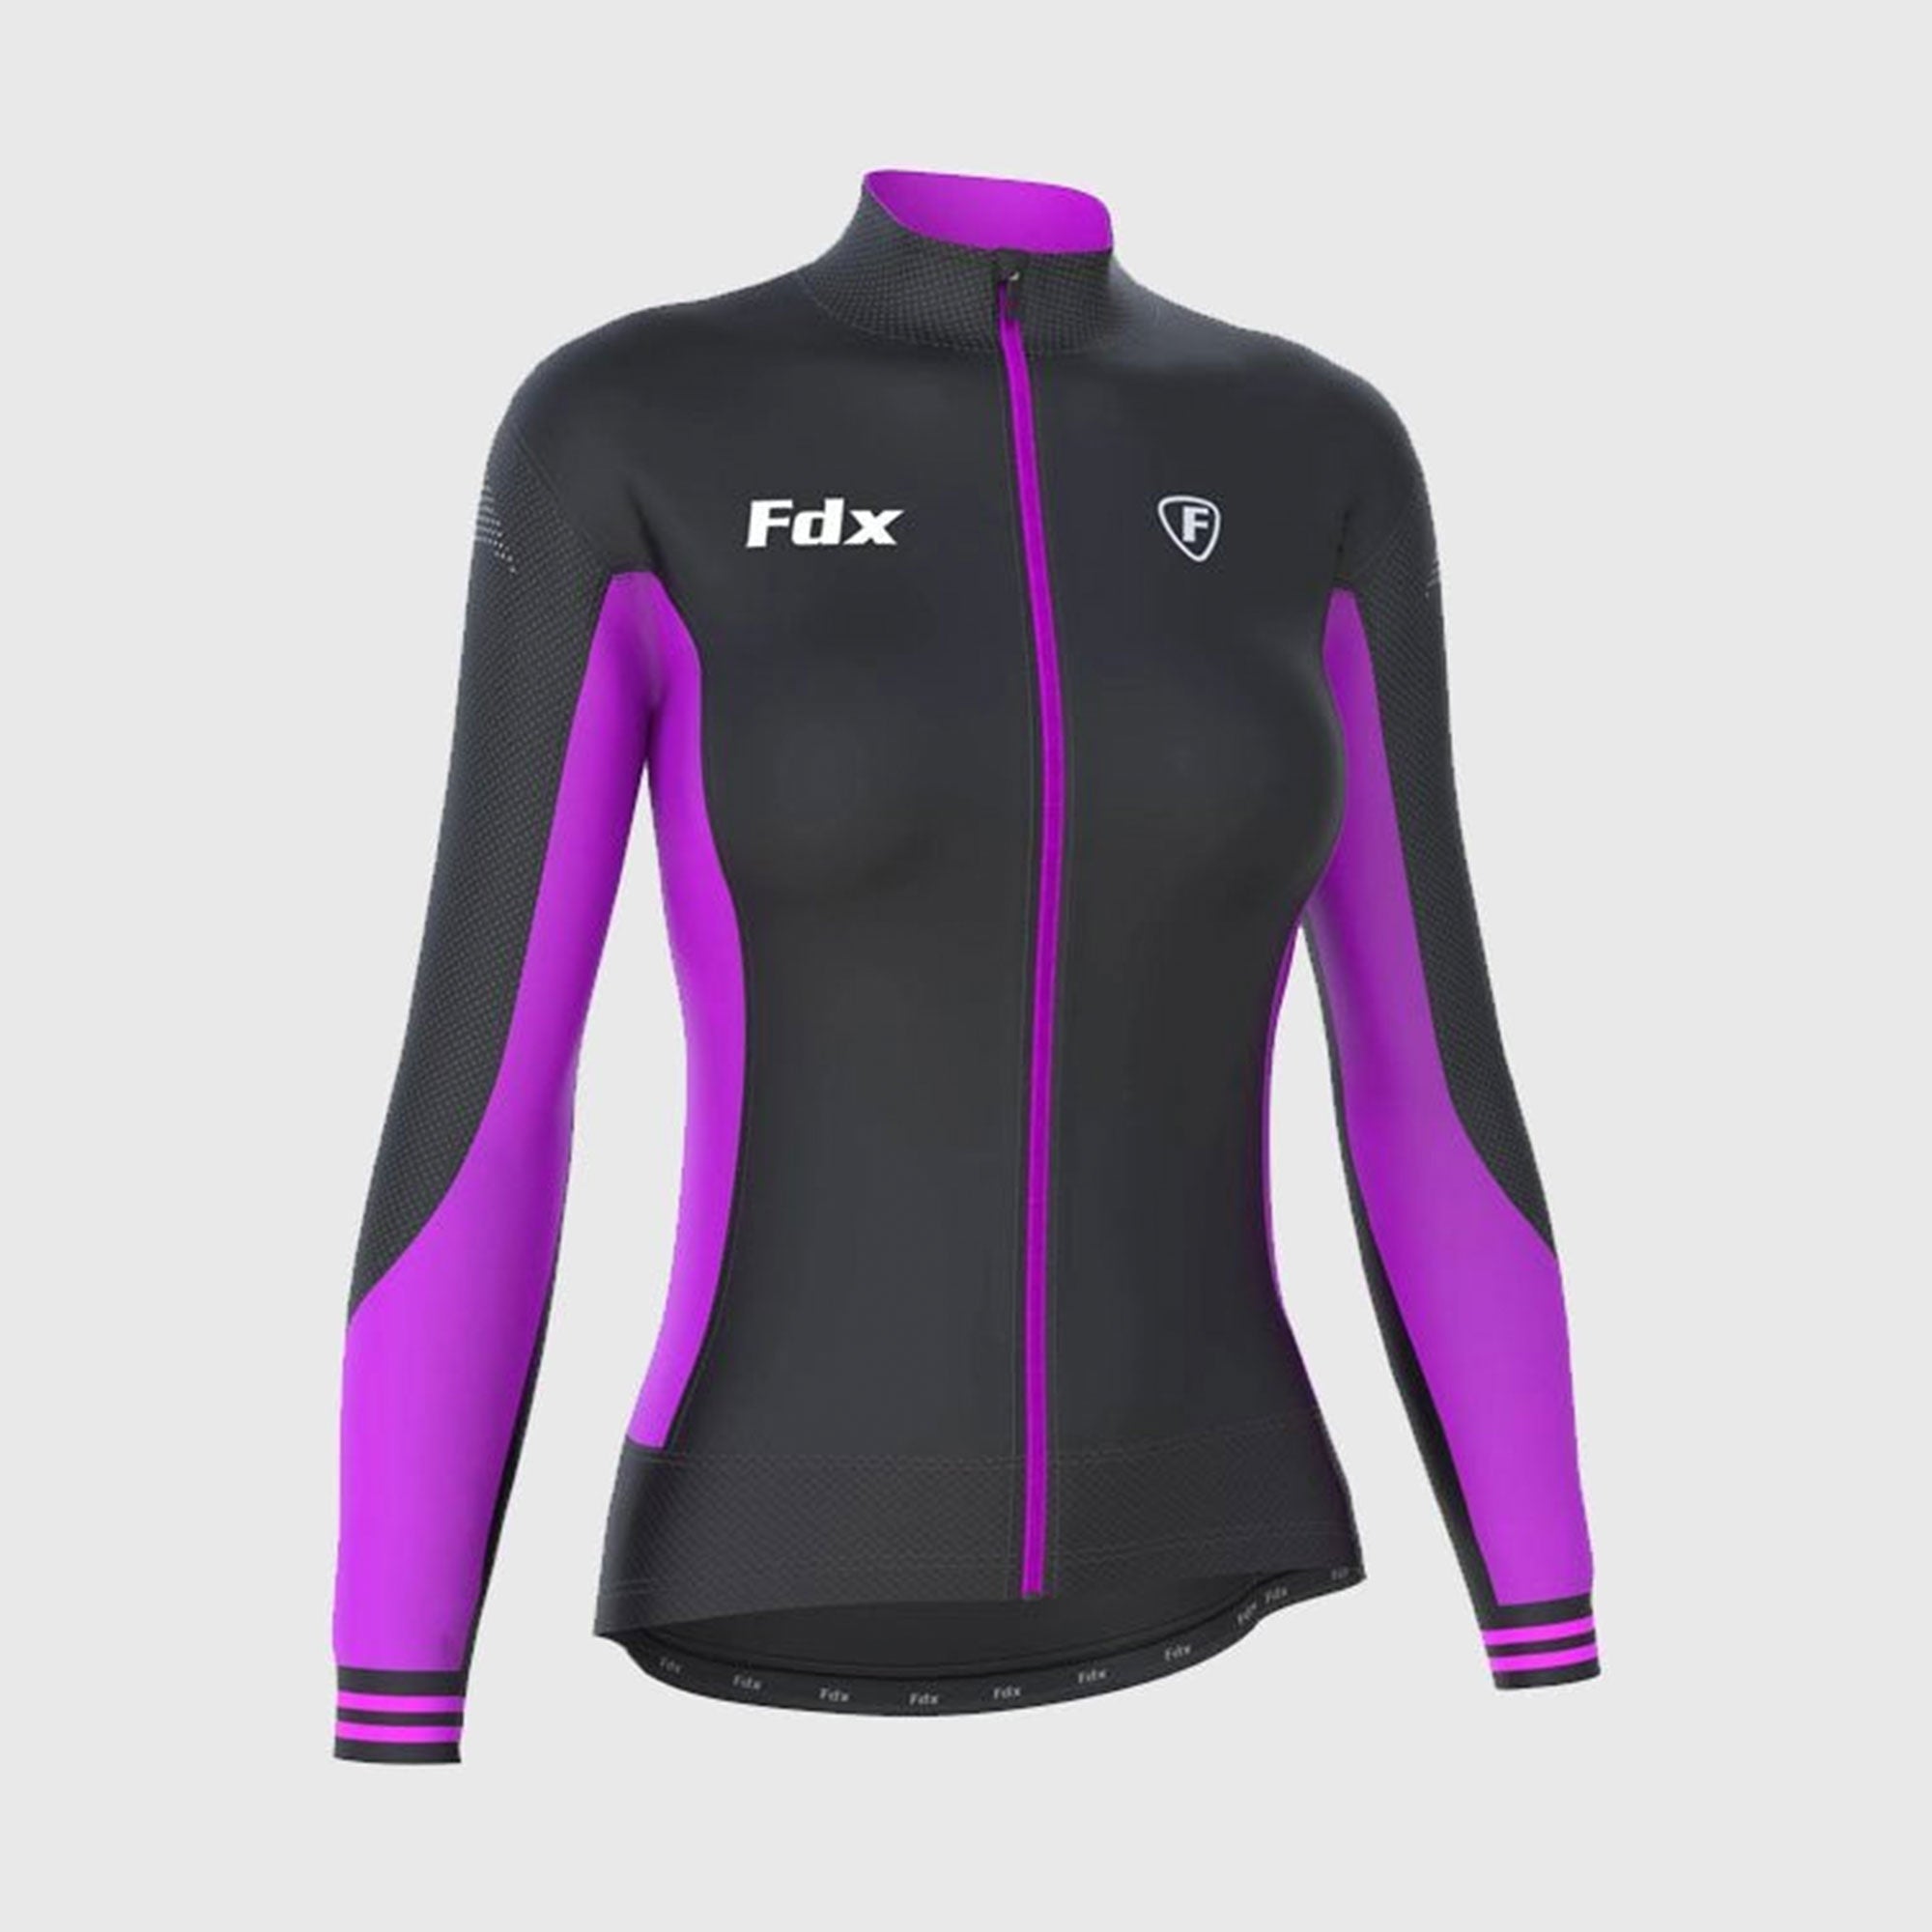 Fdx Womens Black & Purple Long Sleeve Cycling Jersey for Winter Roubaix Thermal Fleece Road Bike Wear Top Full Zipper, Pockets & Hi-viz Reflectors - Thermodream